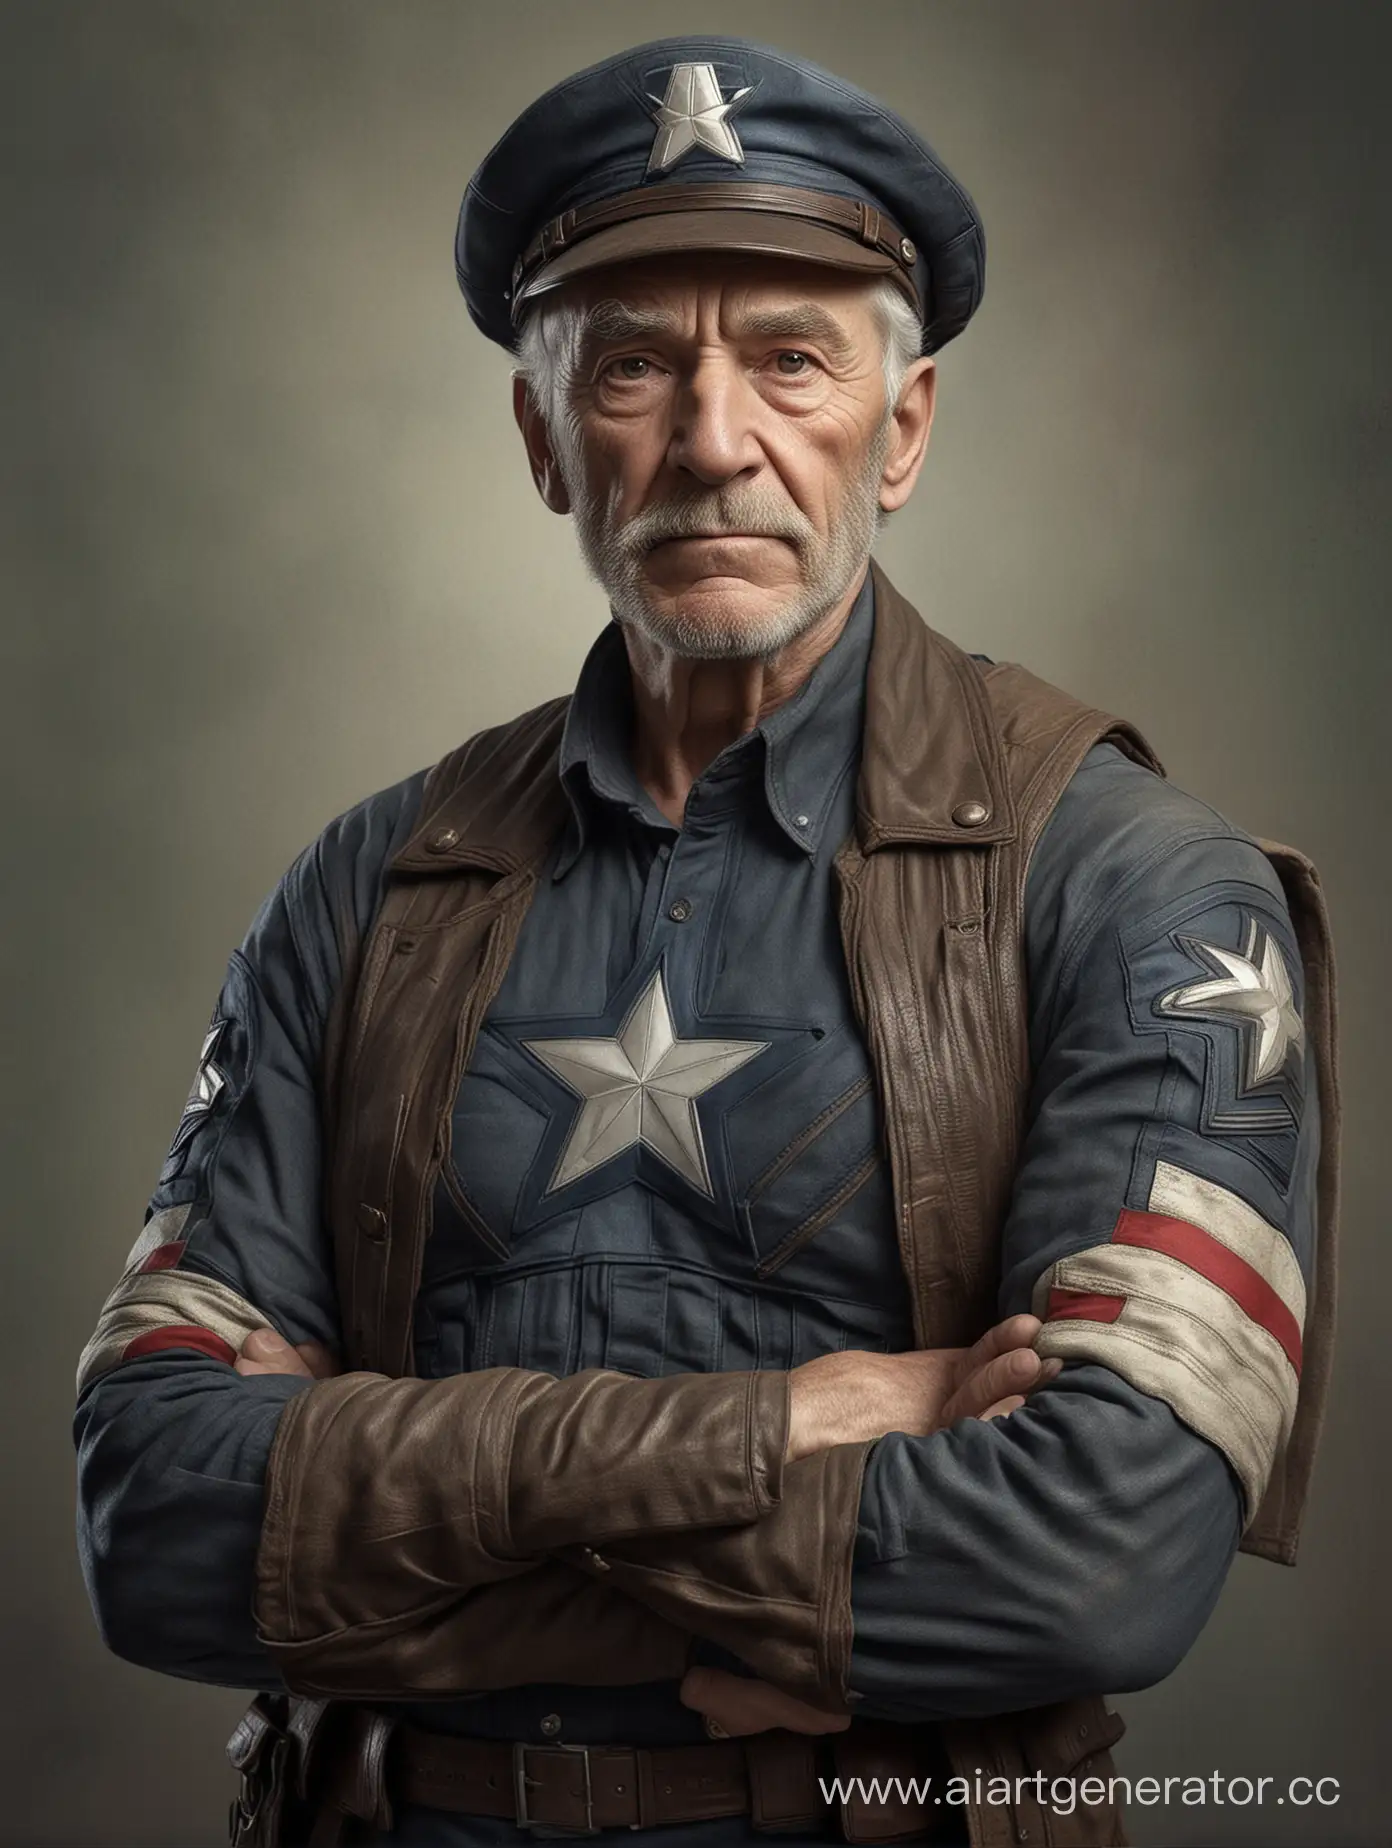 Elderly-Captain-America-A-Vision-of-Aging-Superhero-Legacy